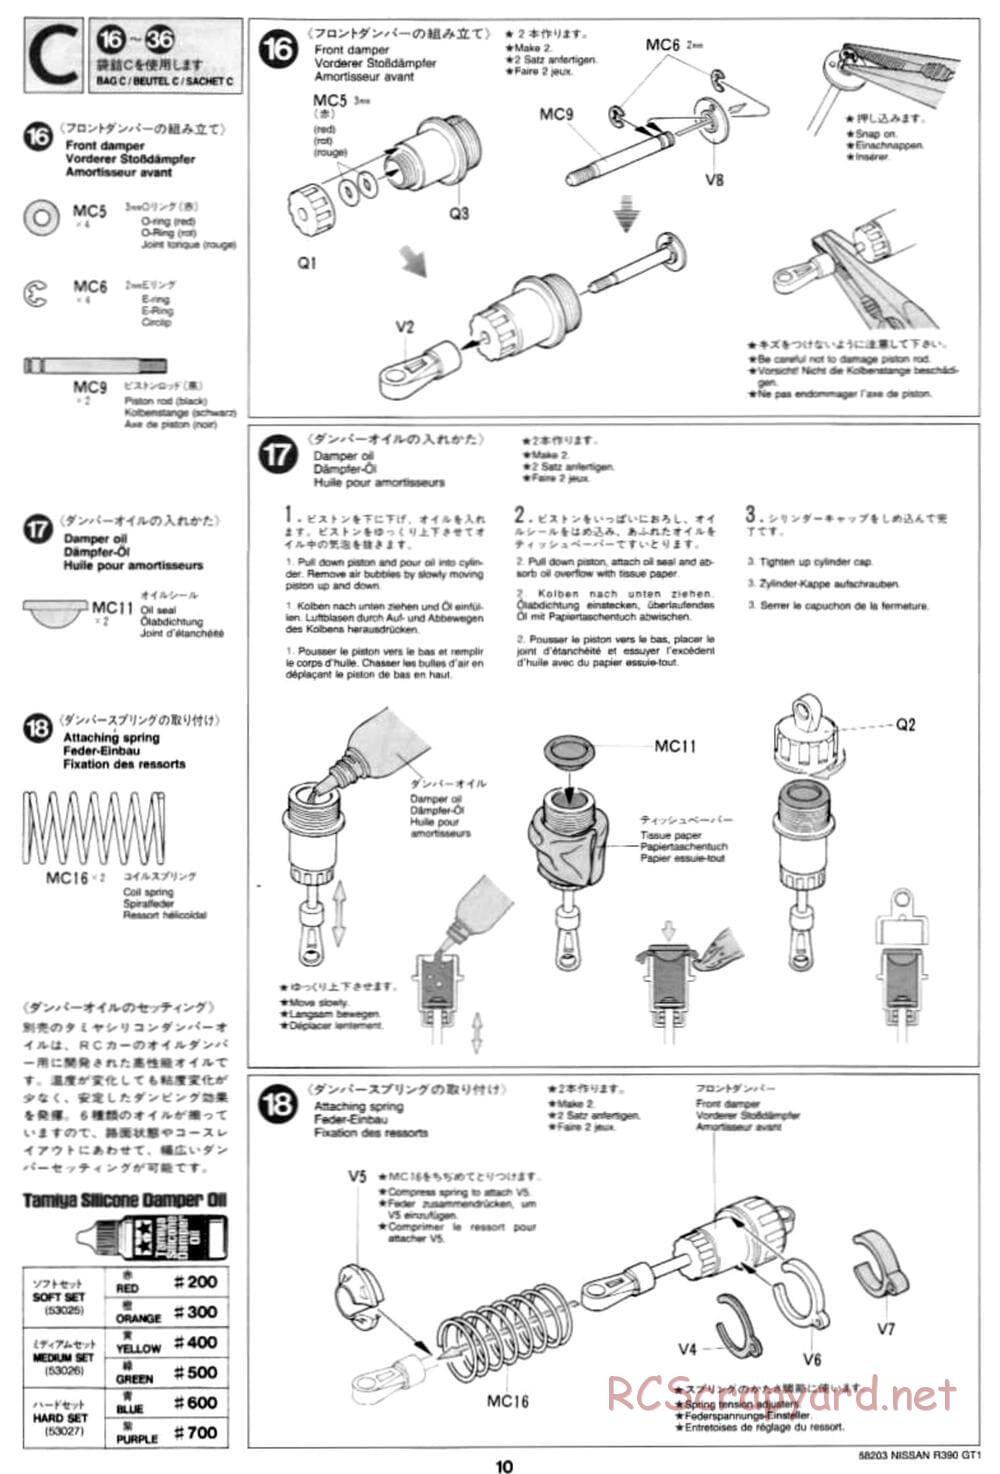 Tamiya - Nissan R390 GT1 - TA-03R Chassis - Manual - Page 10